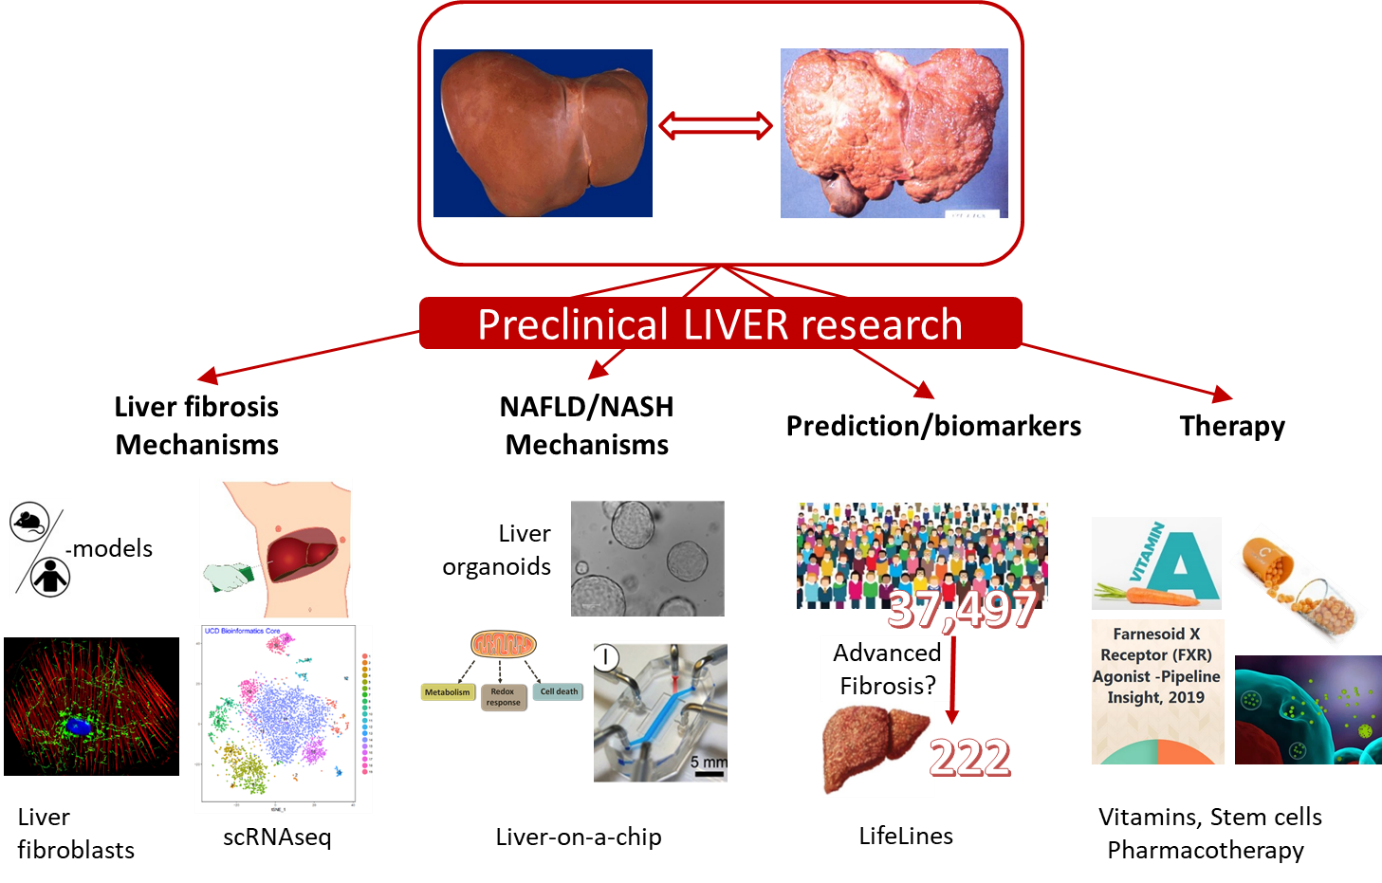 Preclinical liver research